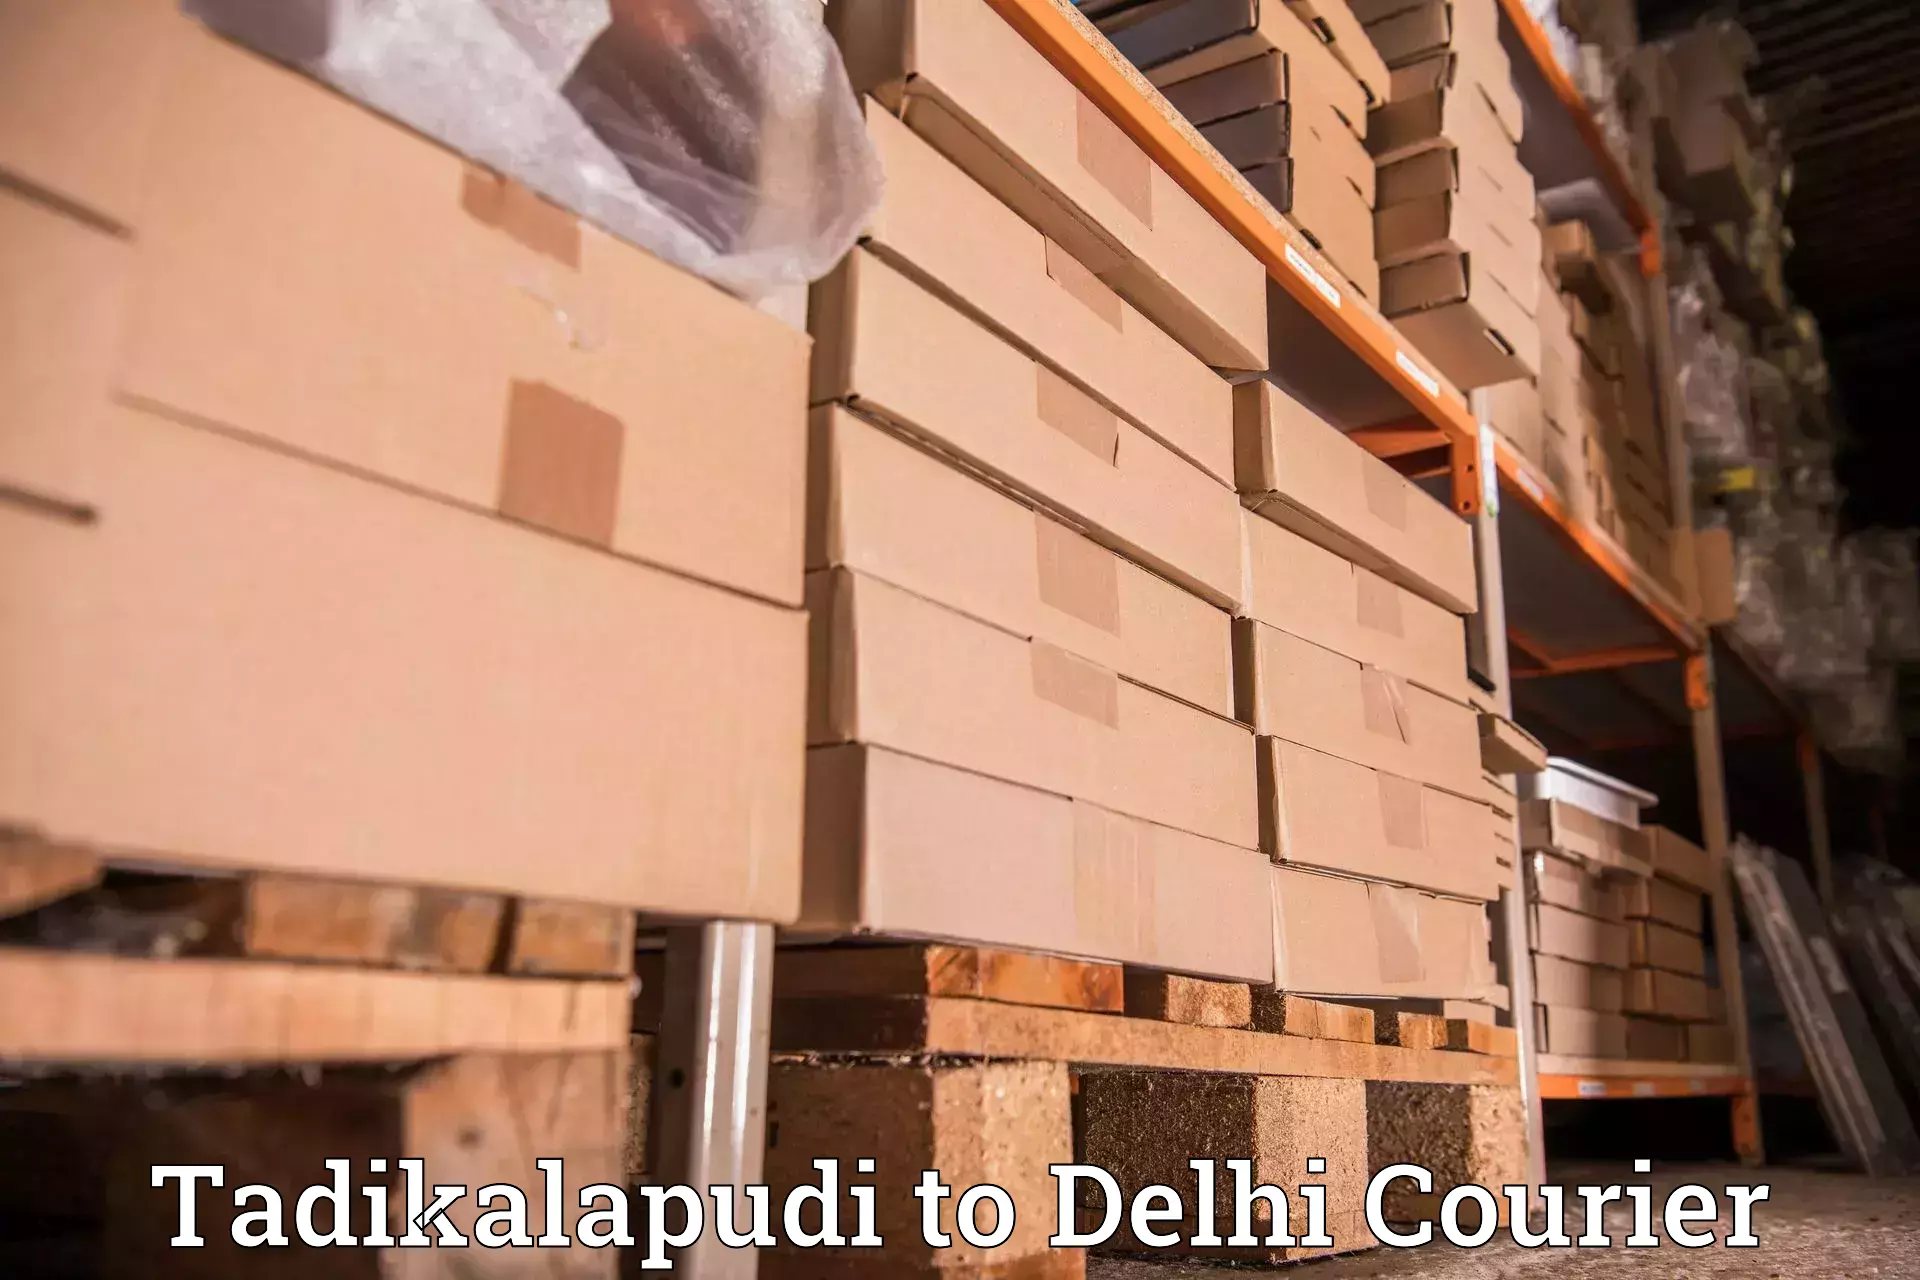 Efficient order fulfillment Tadikalapudi to Delhi